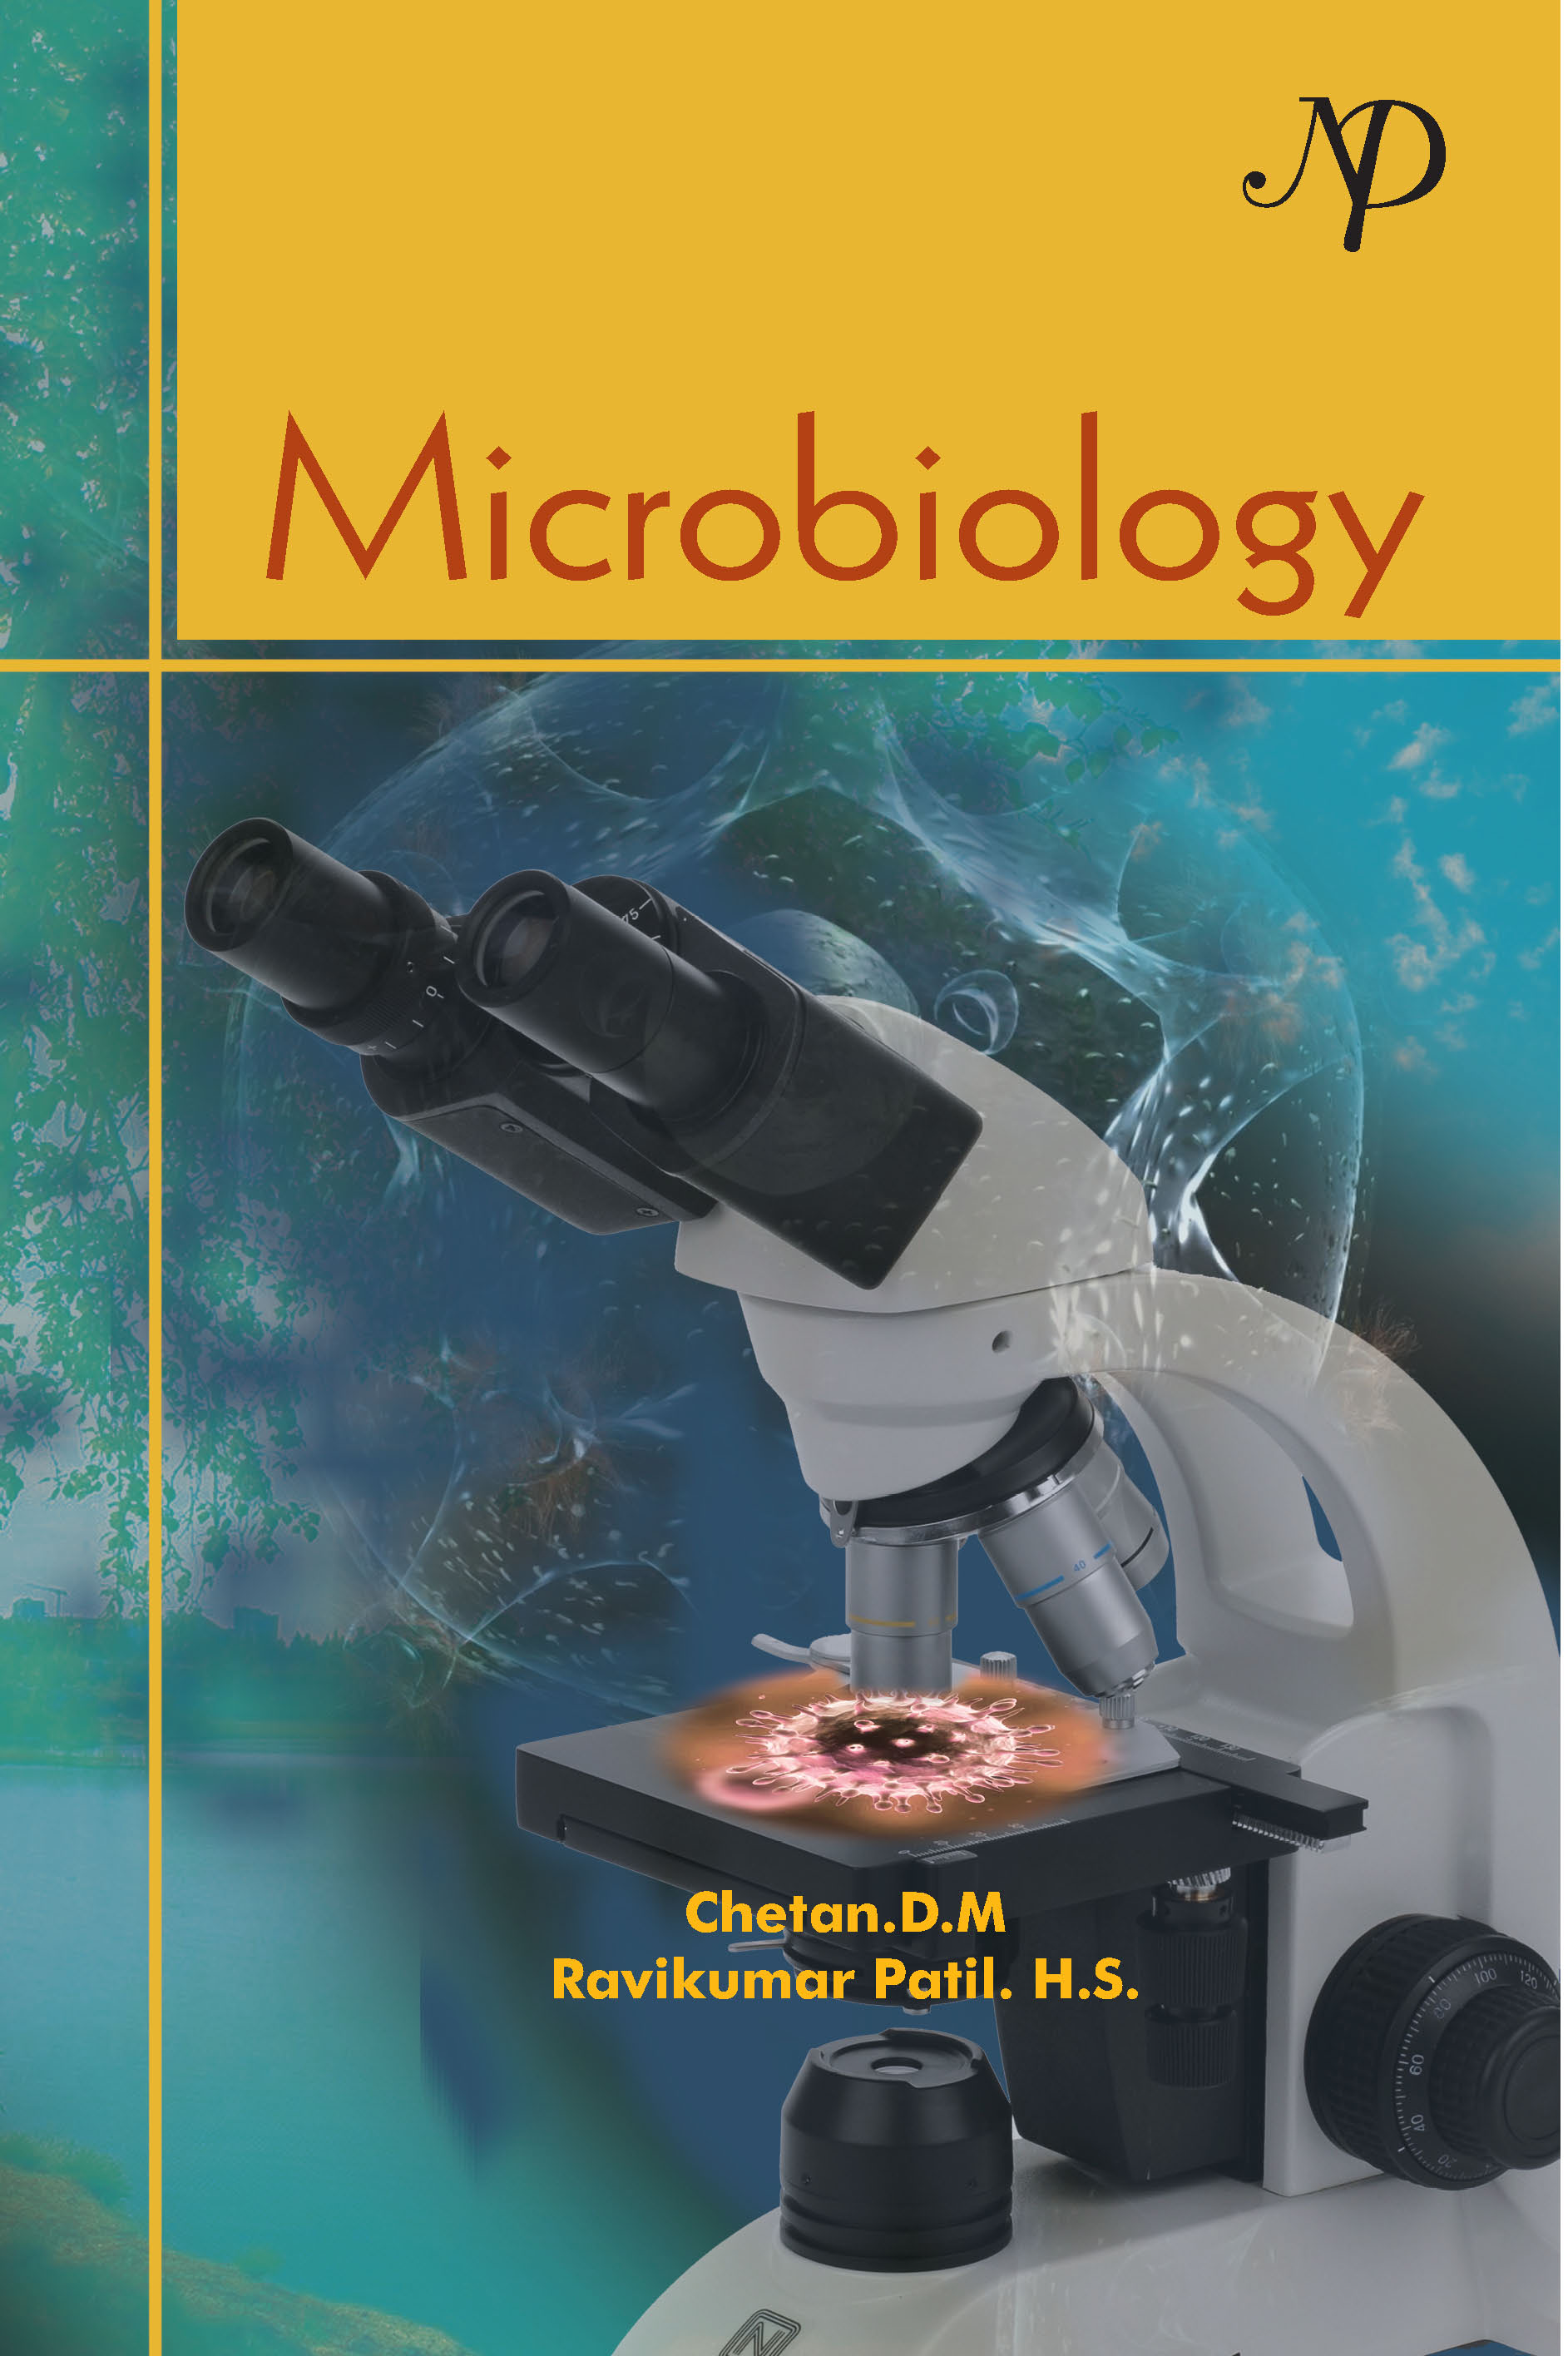 Microbiology by D.M Chetan Cover.jpg